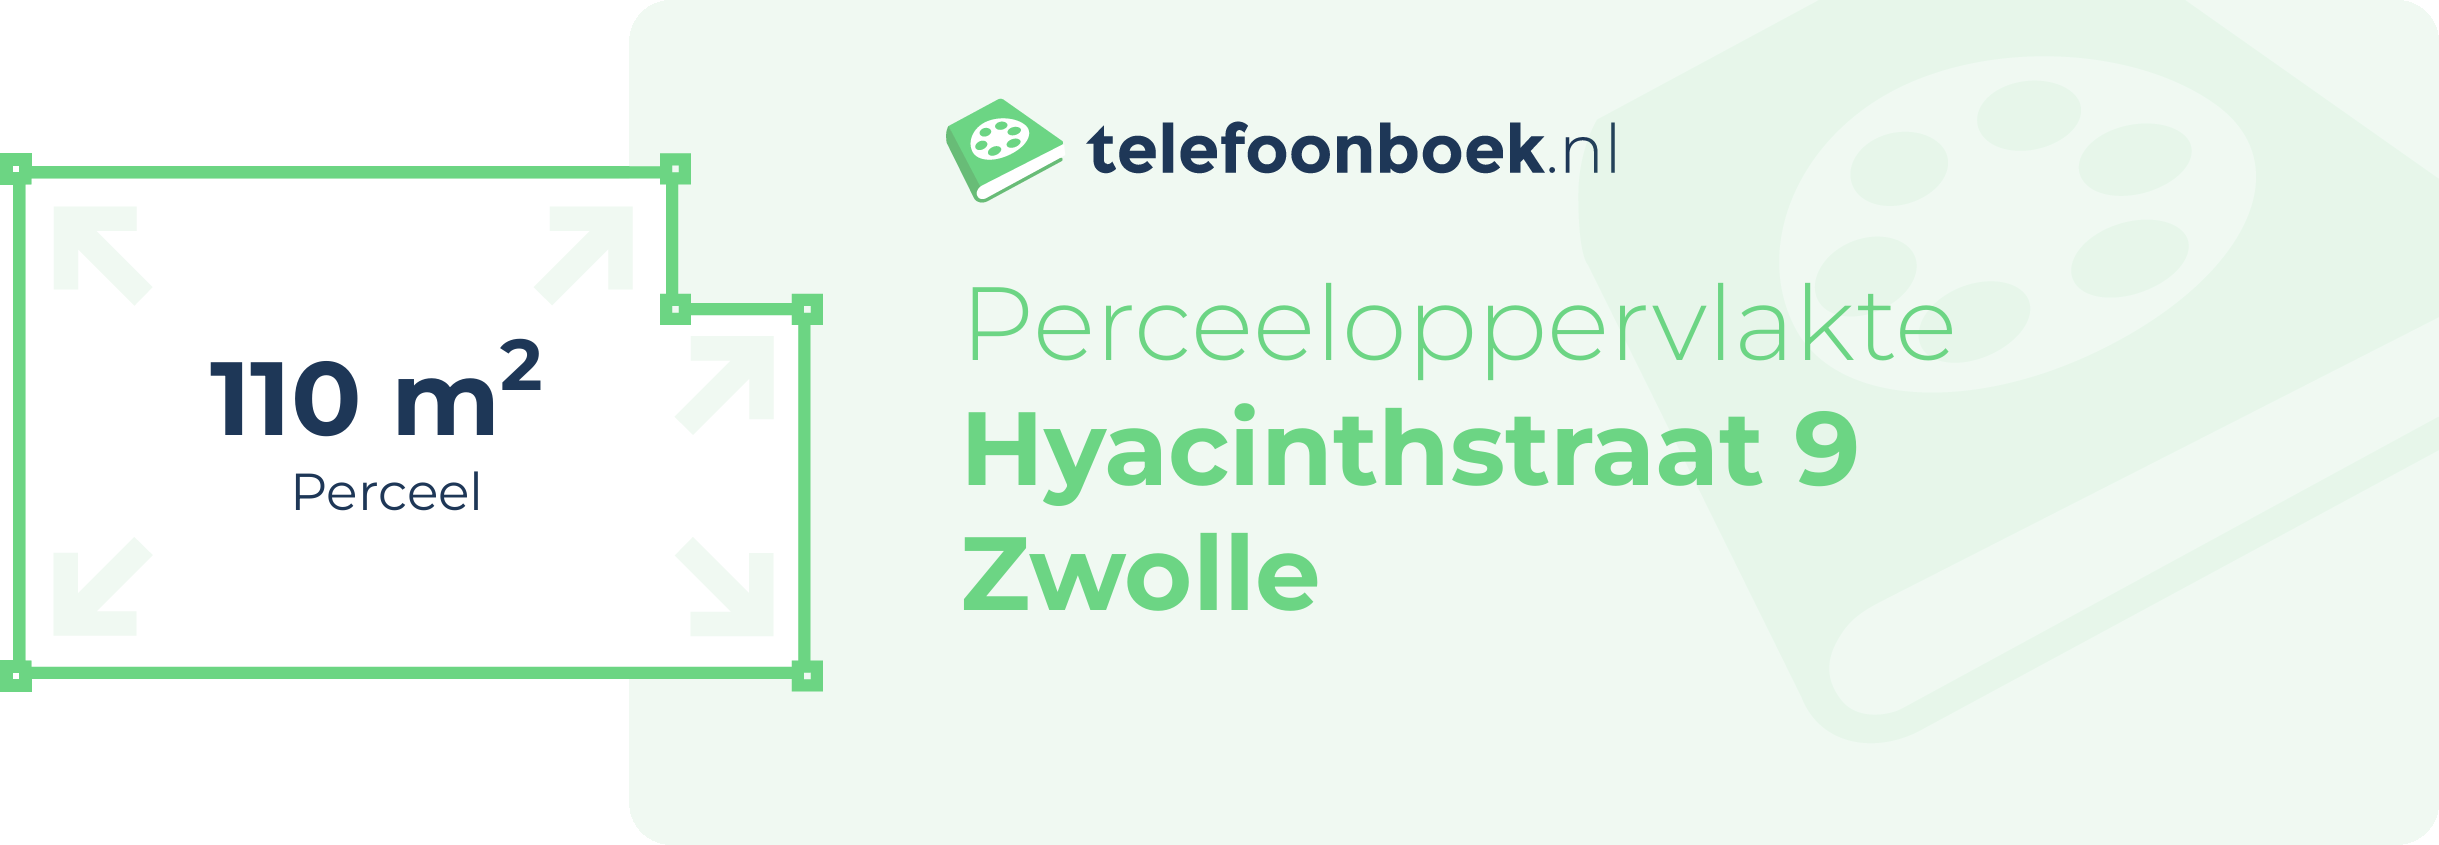 Perceeloppervlakte Hyacinthstraat 9 Zwolle